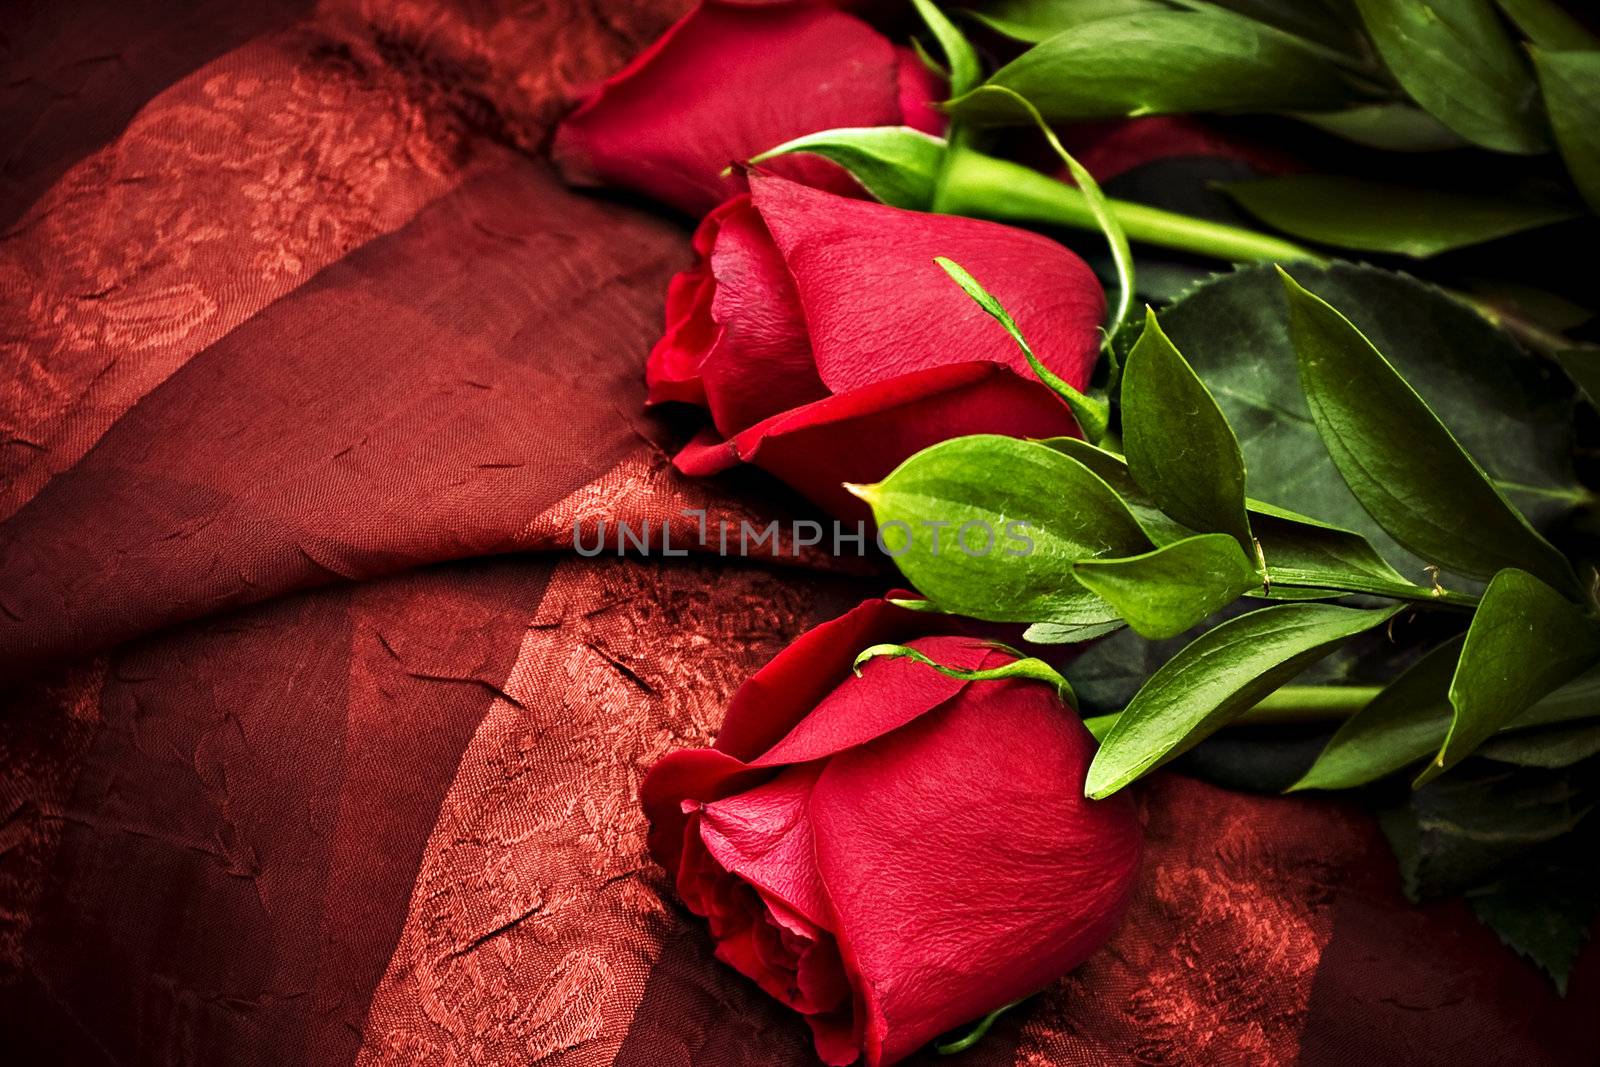 Three beautiful roses by StephanieFrey